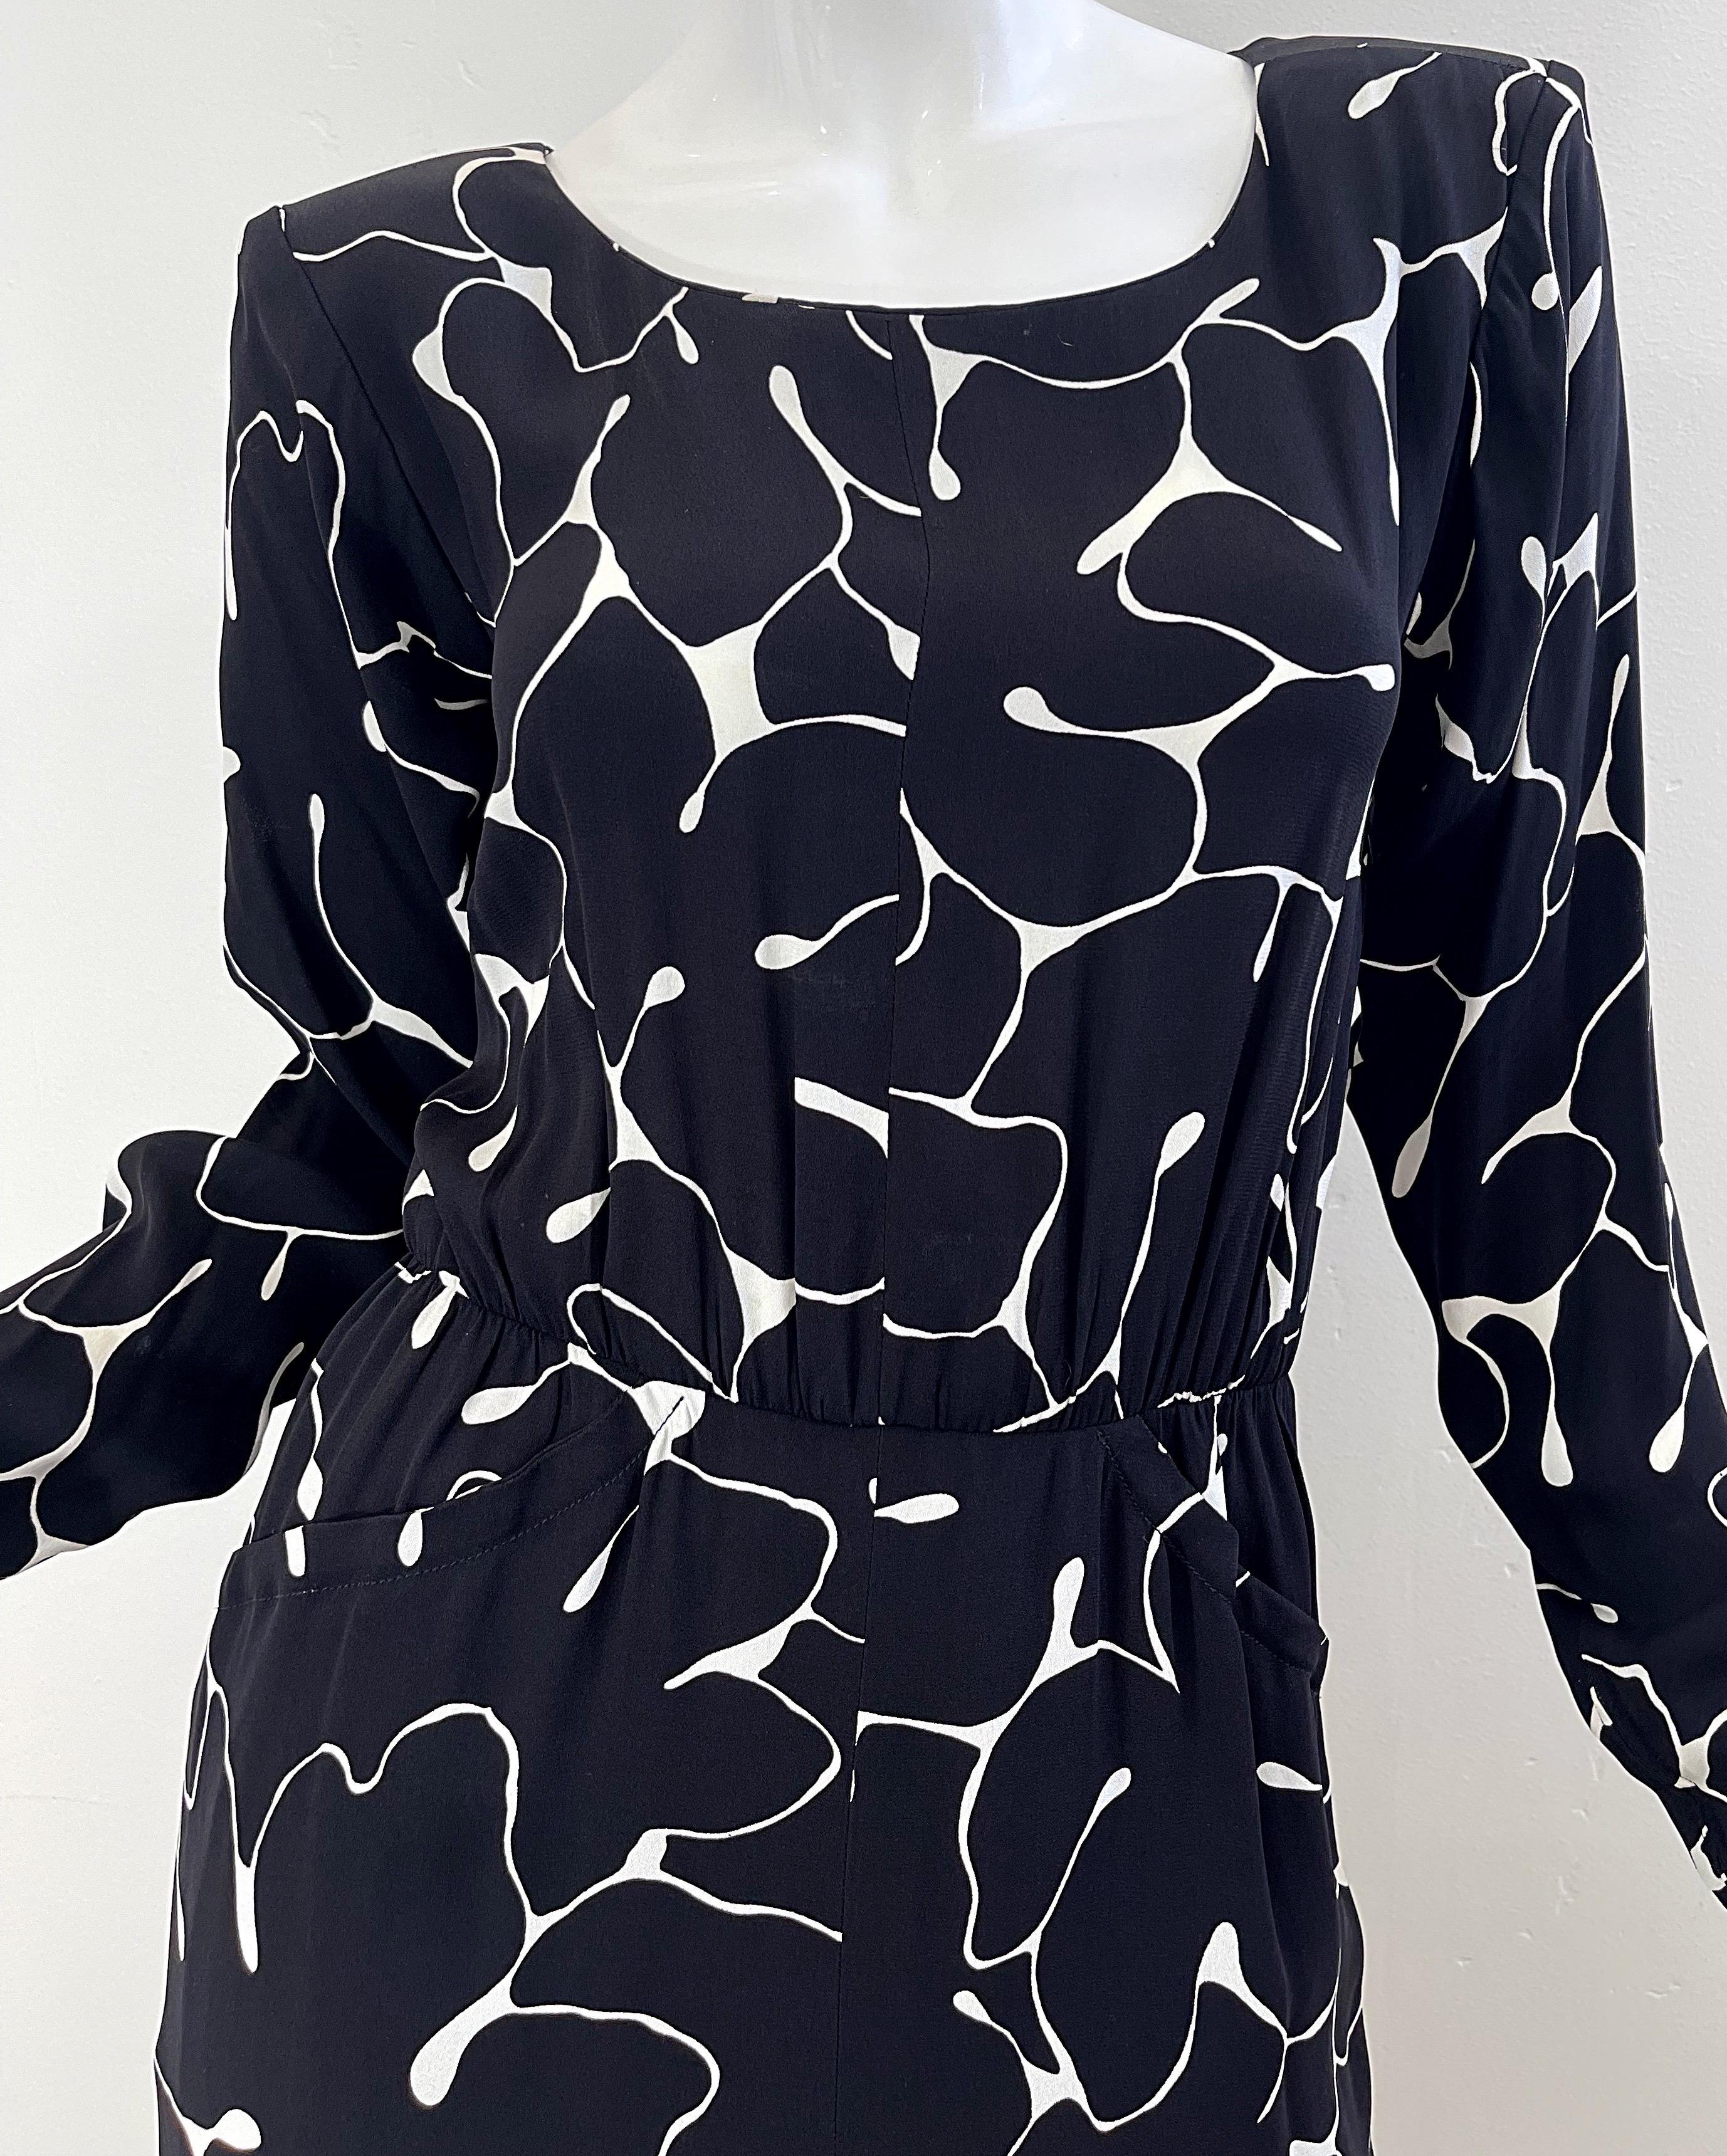 Women's Yves Saint Laurent 1980s Black and White Abstract Flower Print Silk Crepe Dress For Sale